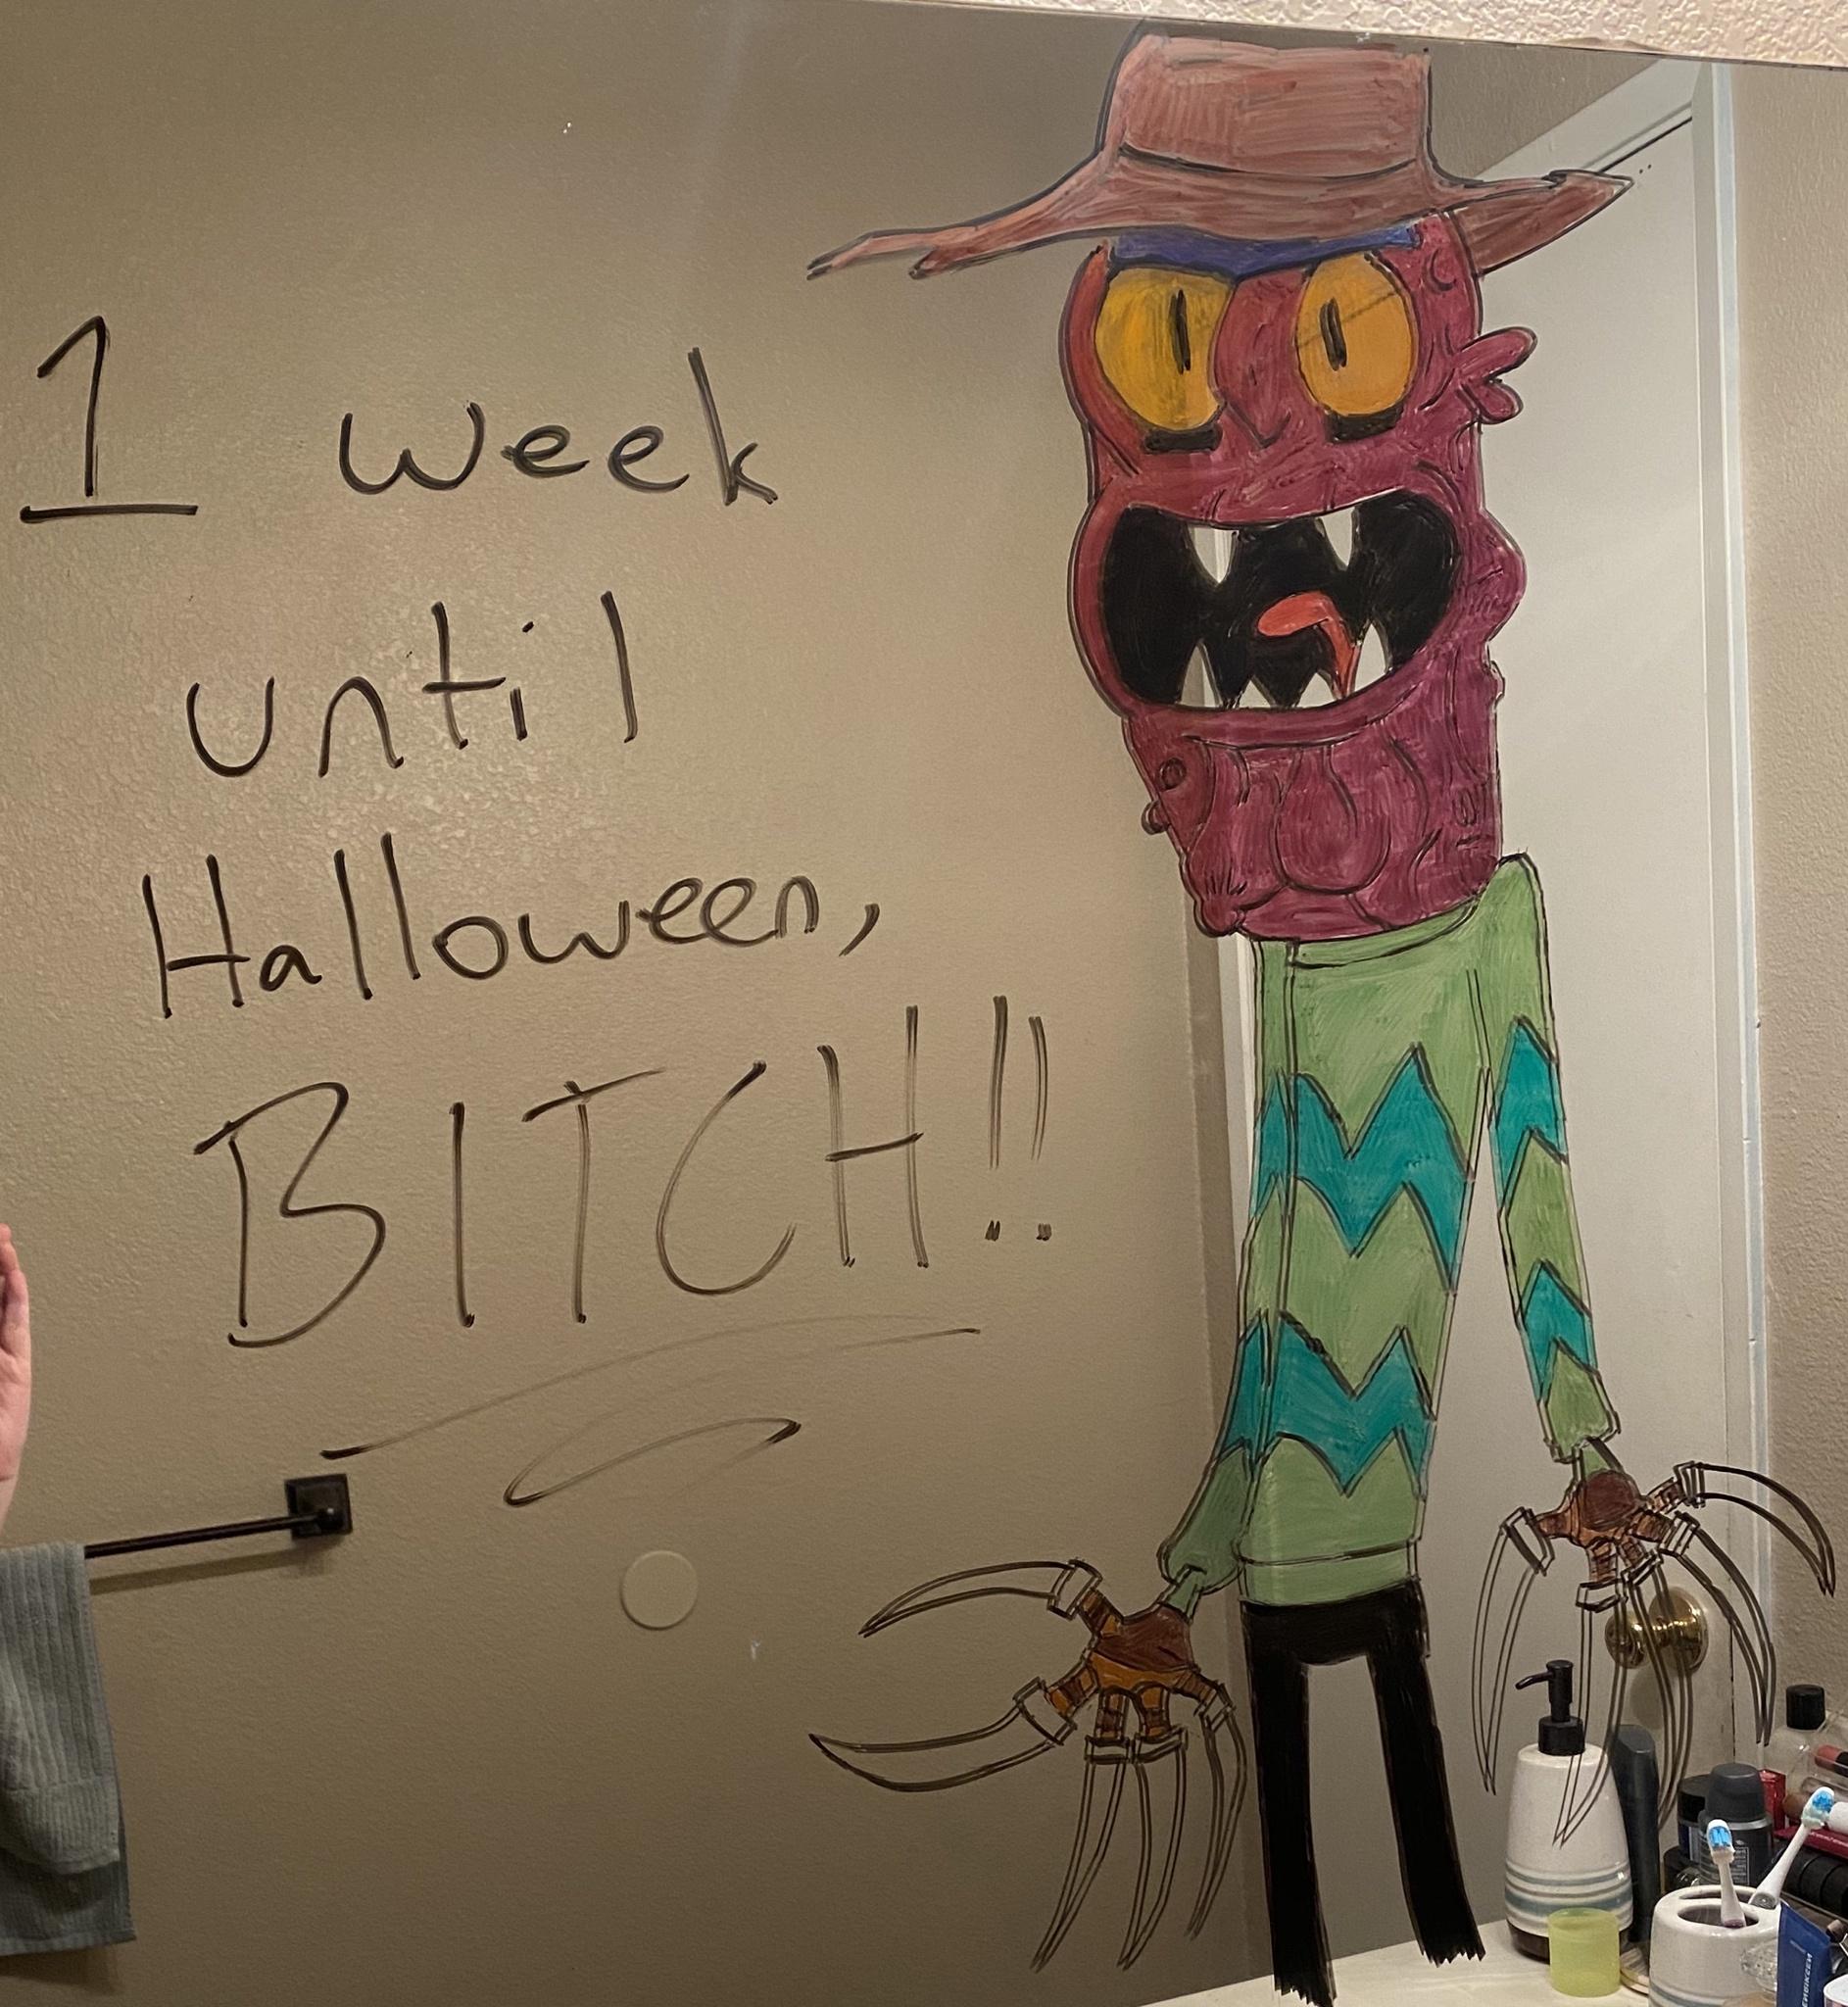 painting - 1 week 00 until Halloween, Bitch .